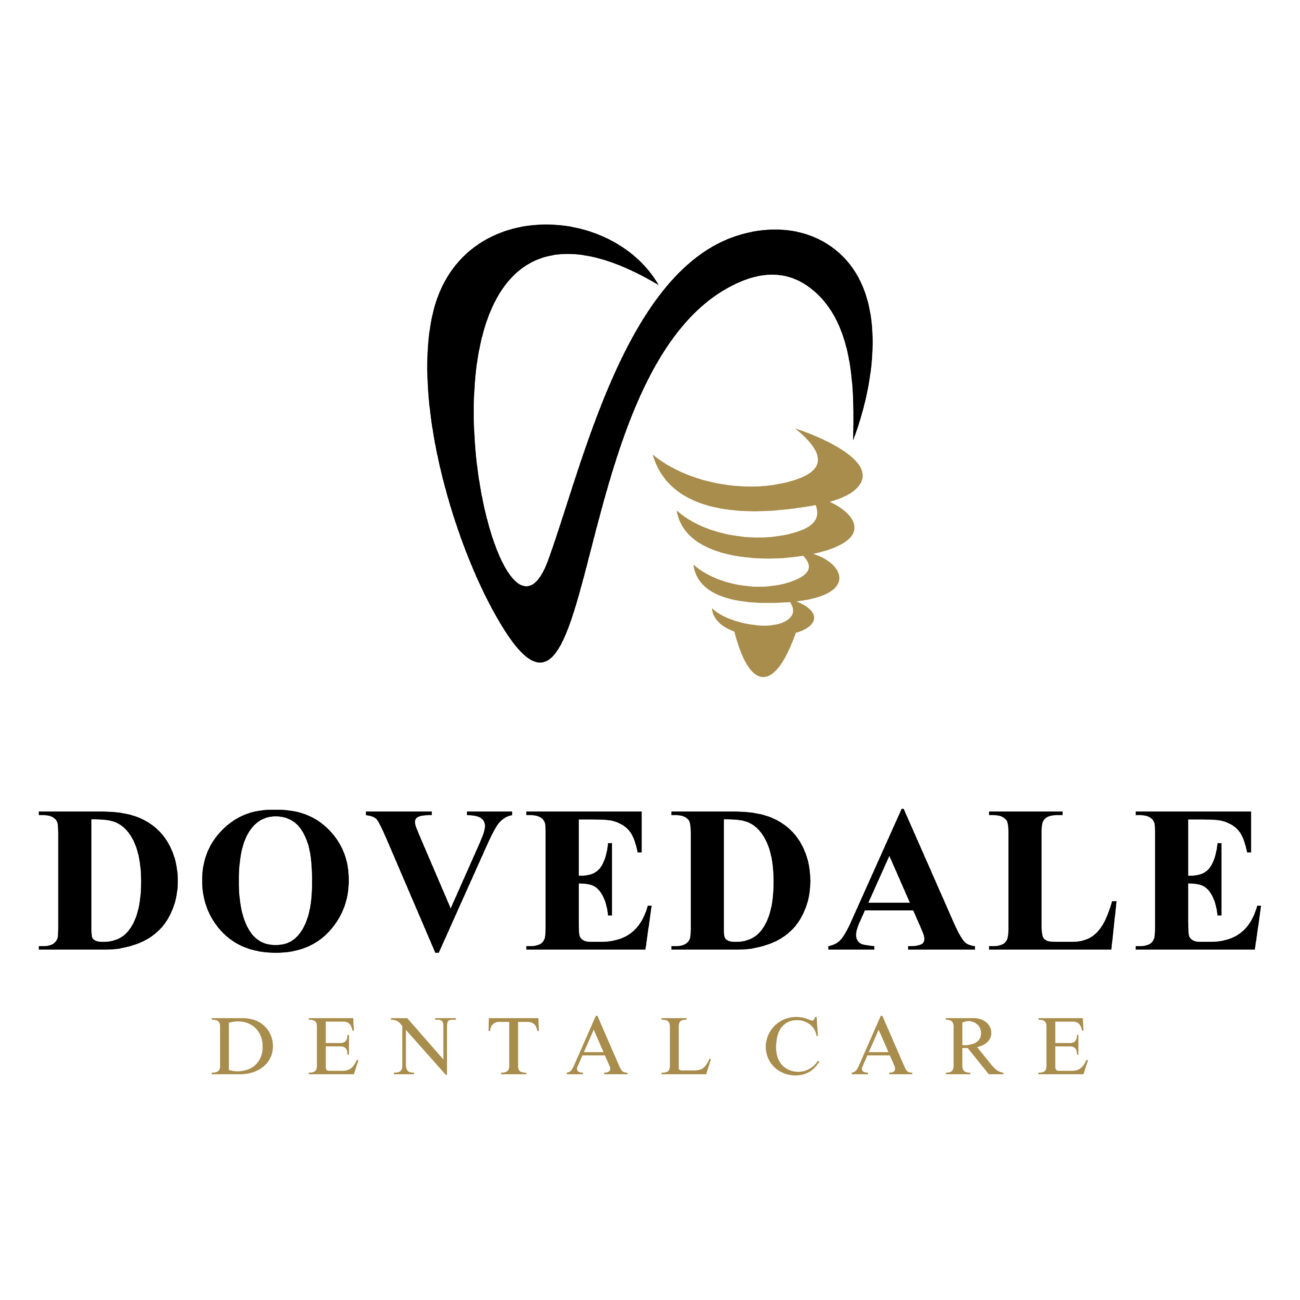 Dovedale Dental Care